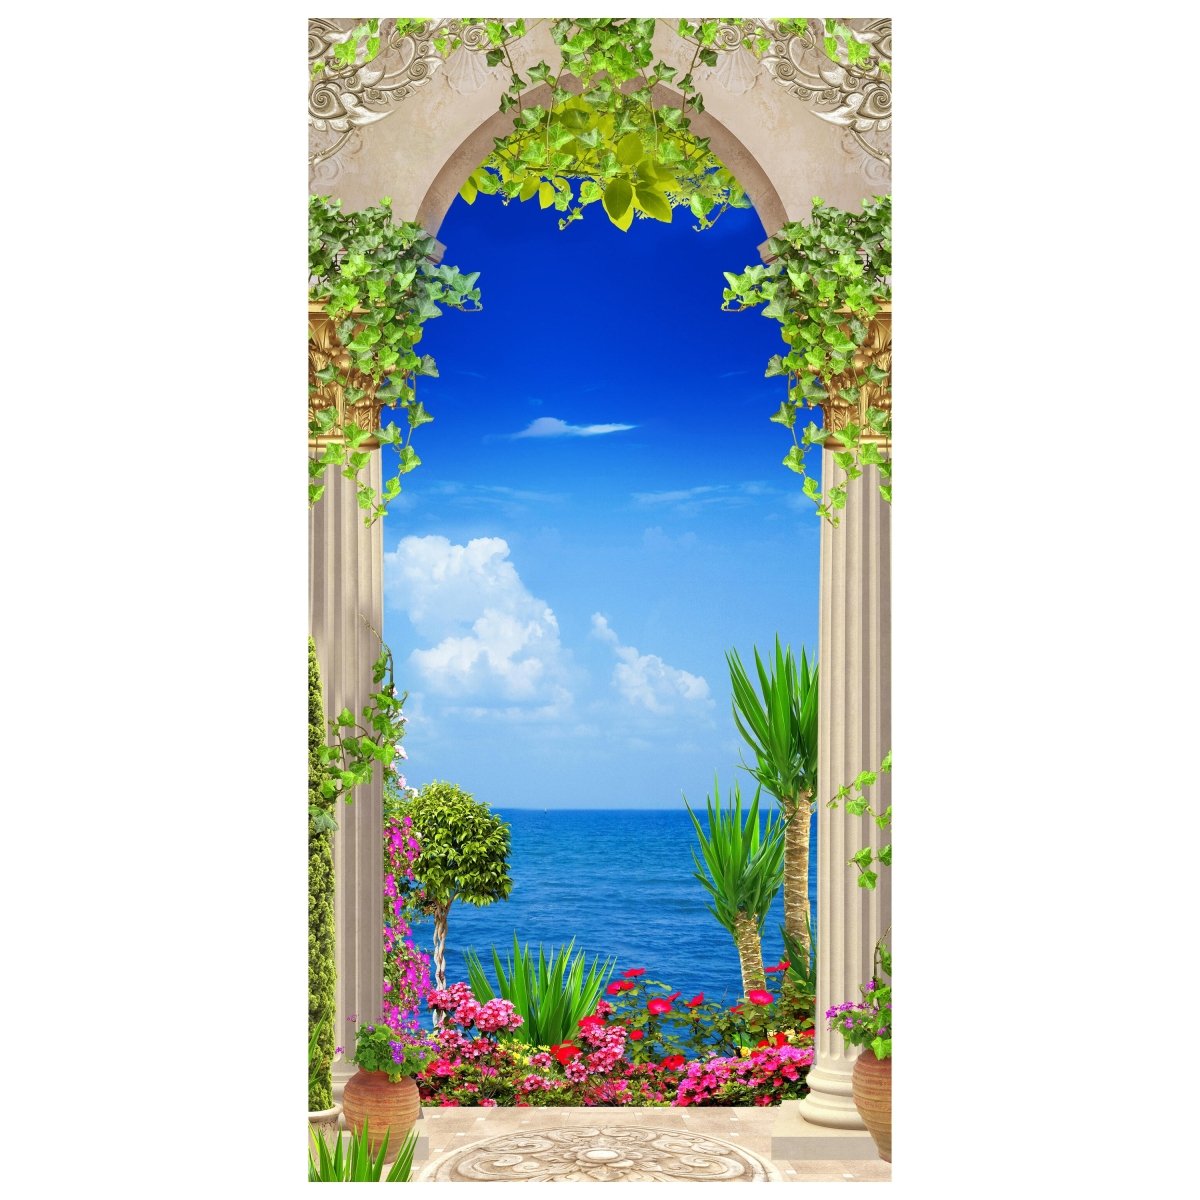 Türtapete Blick aufs Meer, Säulen, Pflanzen, Efeu M1296 - Bild 2